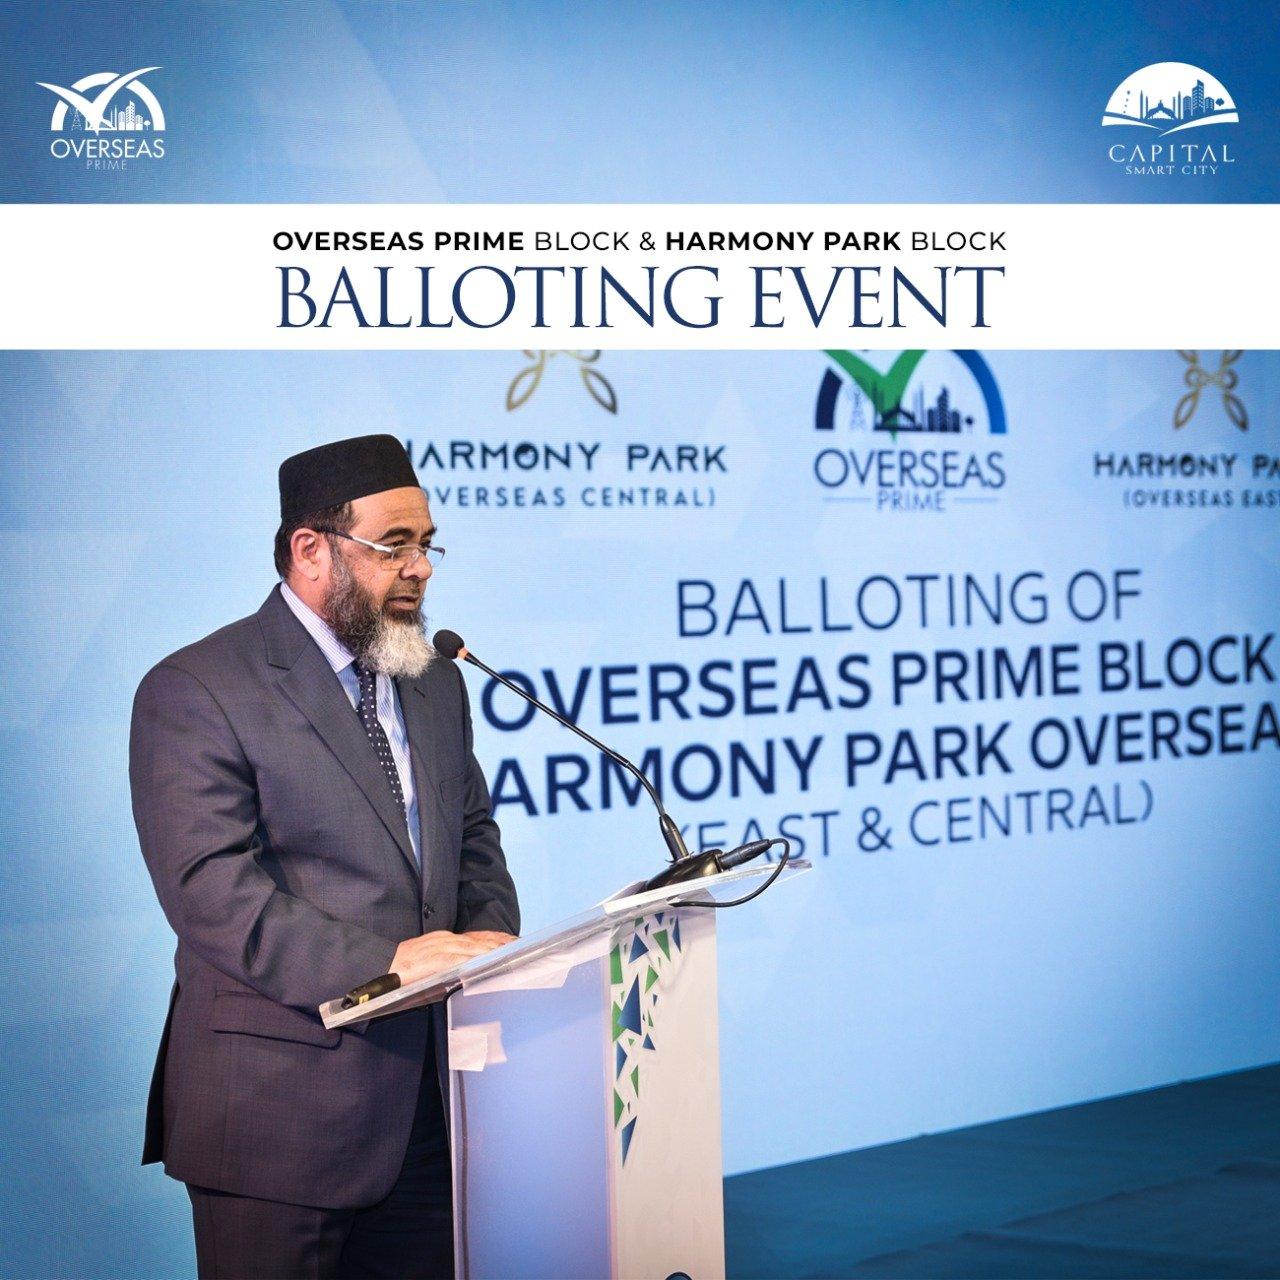 Overseas Prime Block & Harmony Park Block Balloting Event